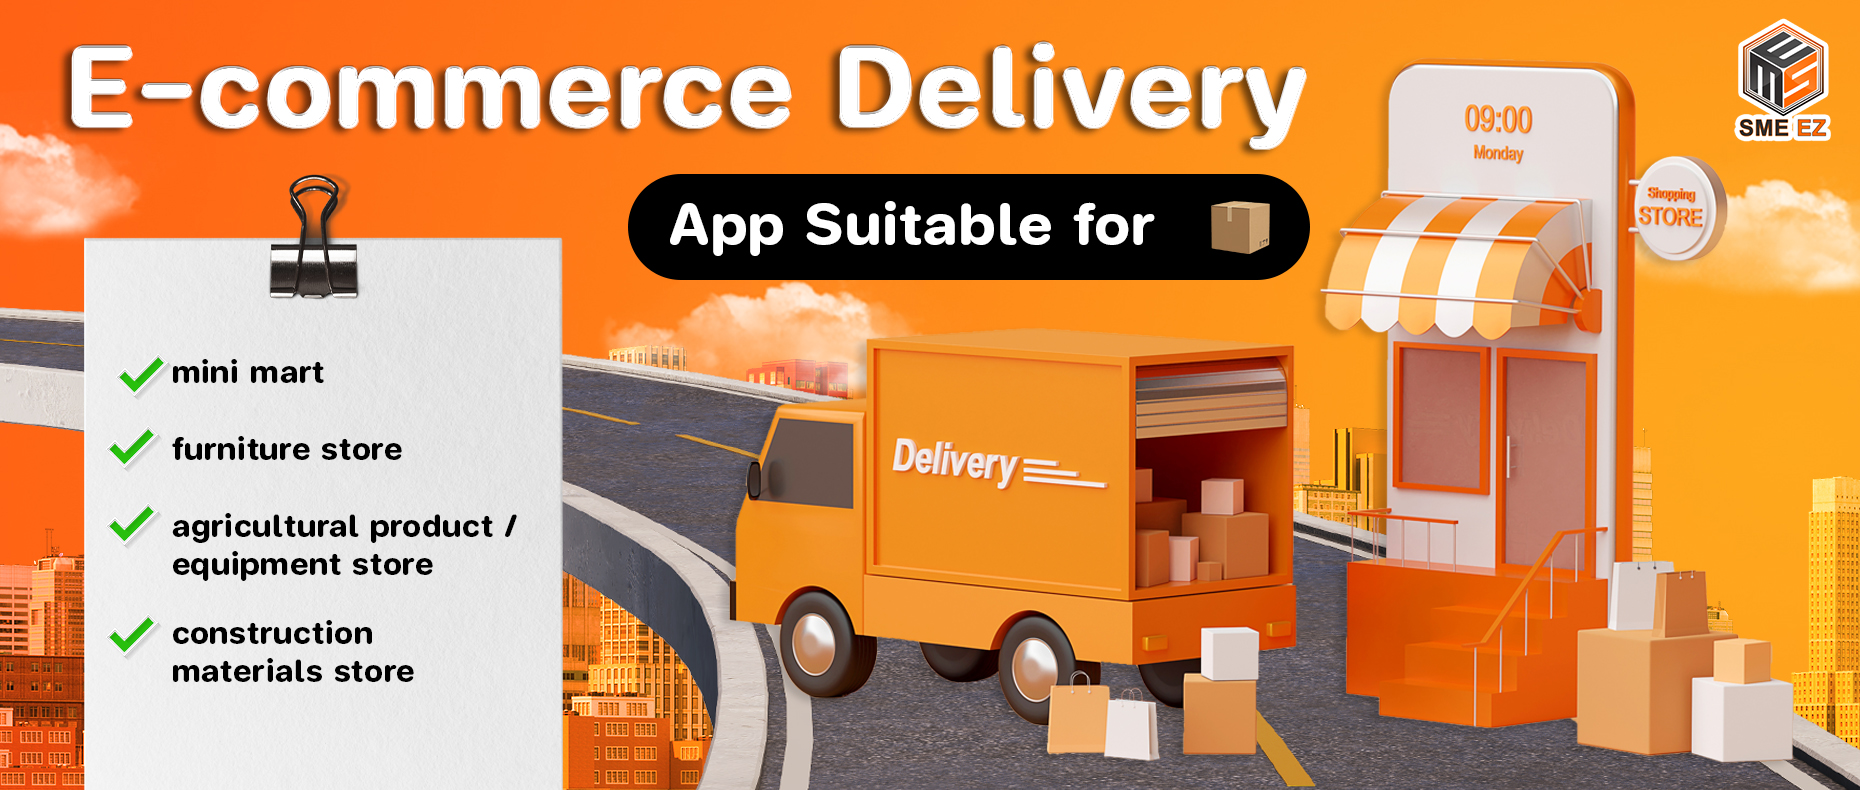 Food Delivery แอพสั่งอาหารที่ร้านค้ายุคใหม่ ต้องมี platform เราประกอบด้วย 3 แอพ: แอพคนสั่ง Dee Delivery, แอพ Rider, แอพ Restaurant